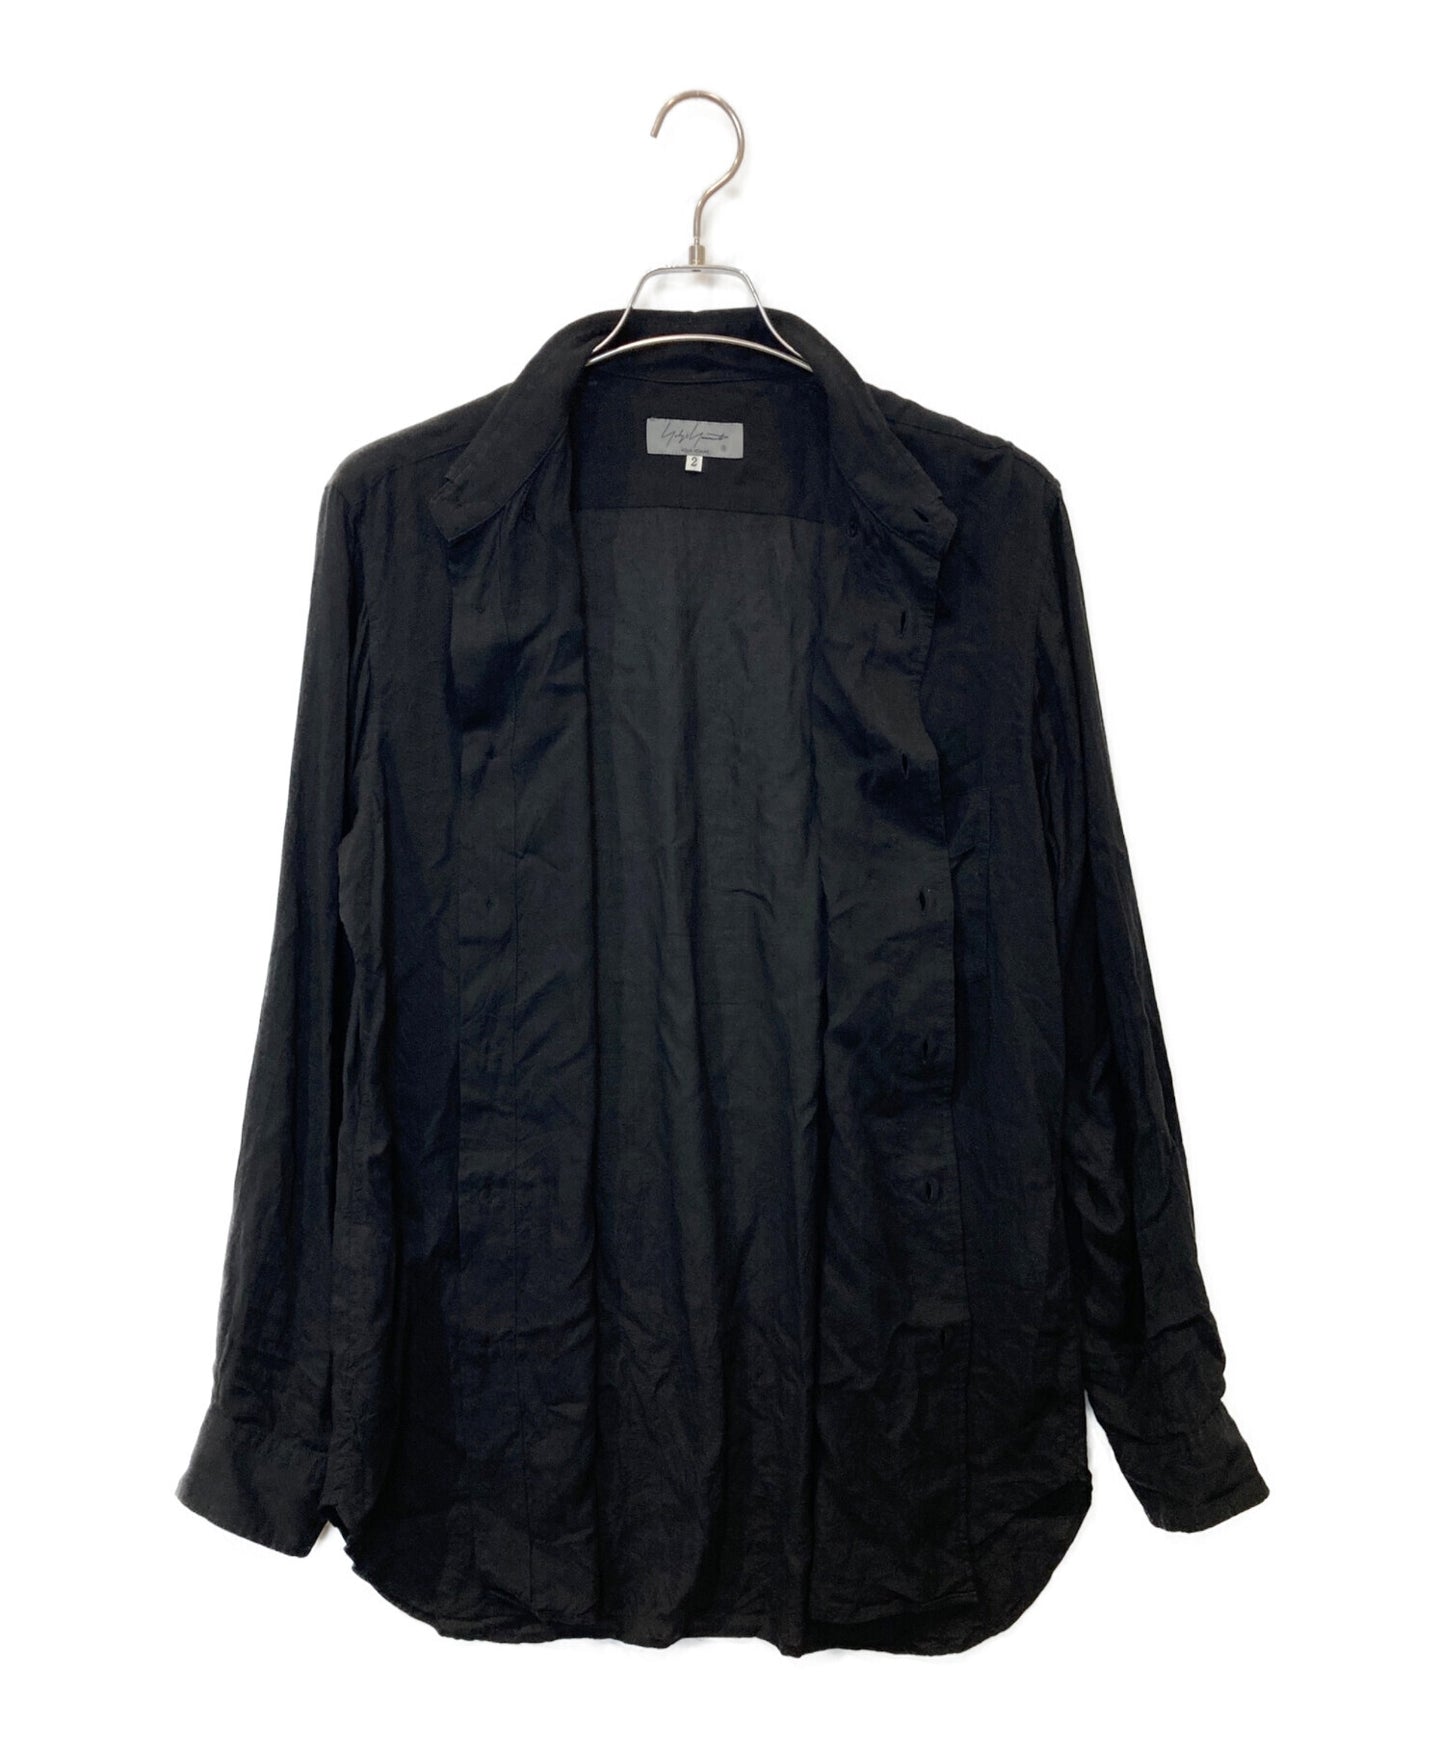 Yohji Yamamoto Pour Homme เสื้อเชิ้ตพร้อมคอปก HX-B16-201